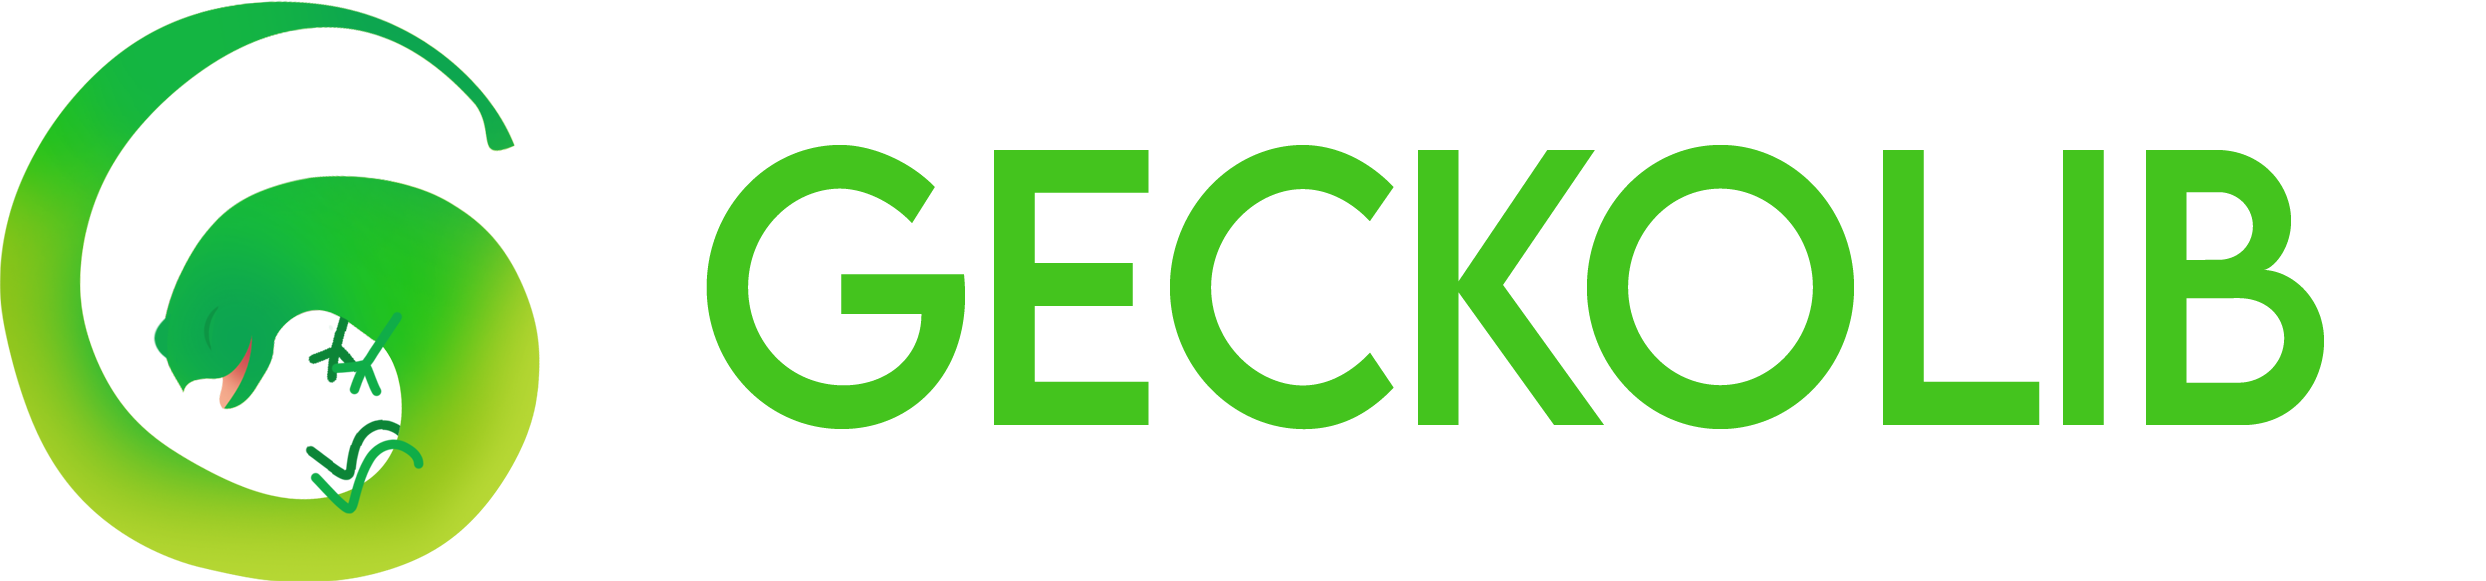 GeckoLib